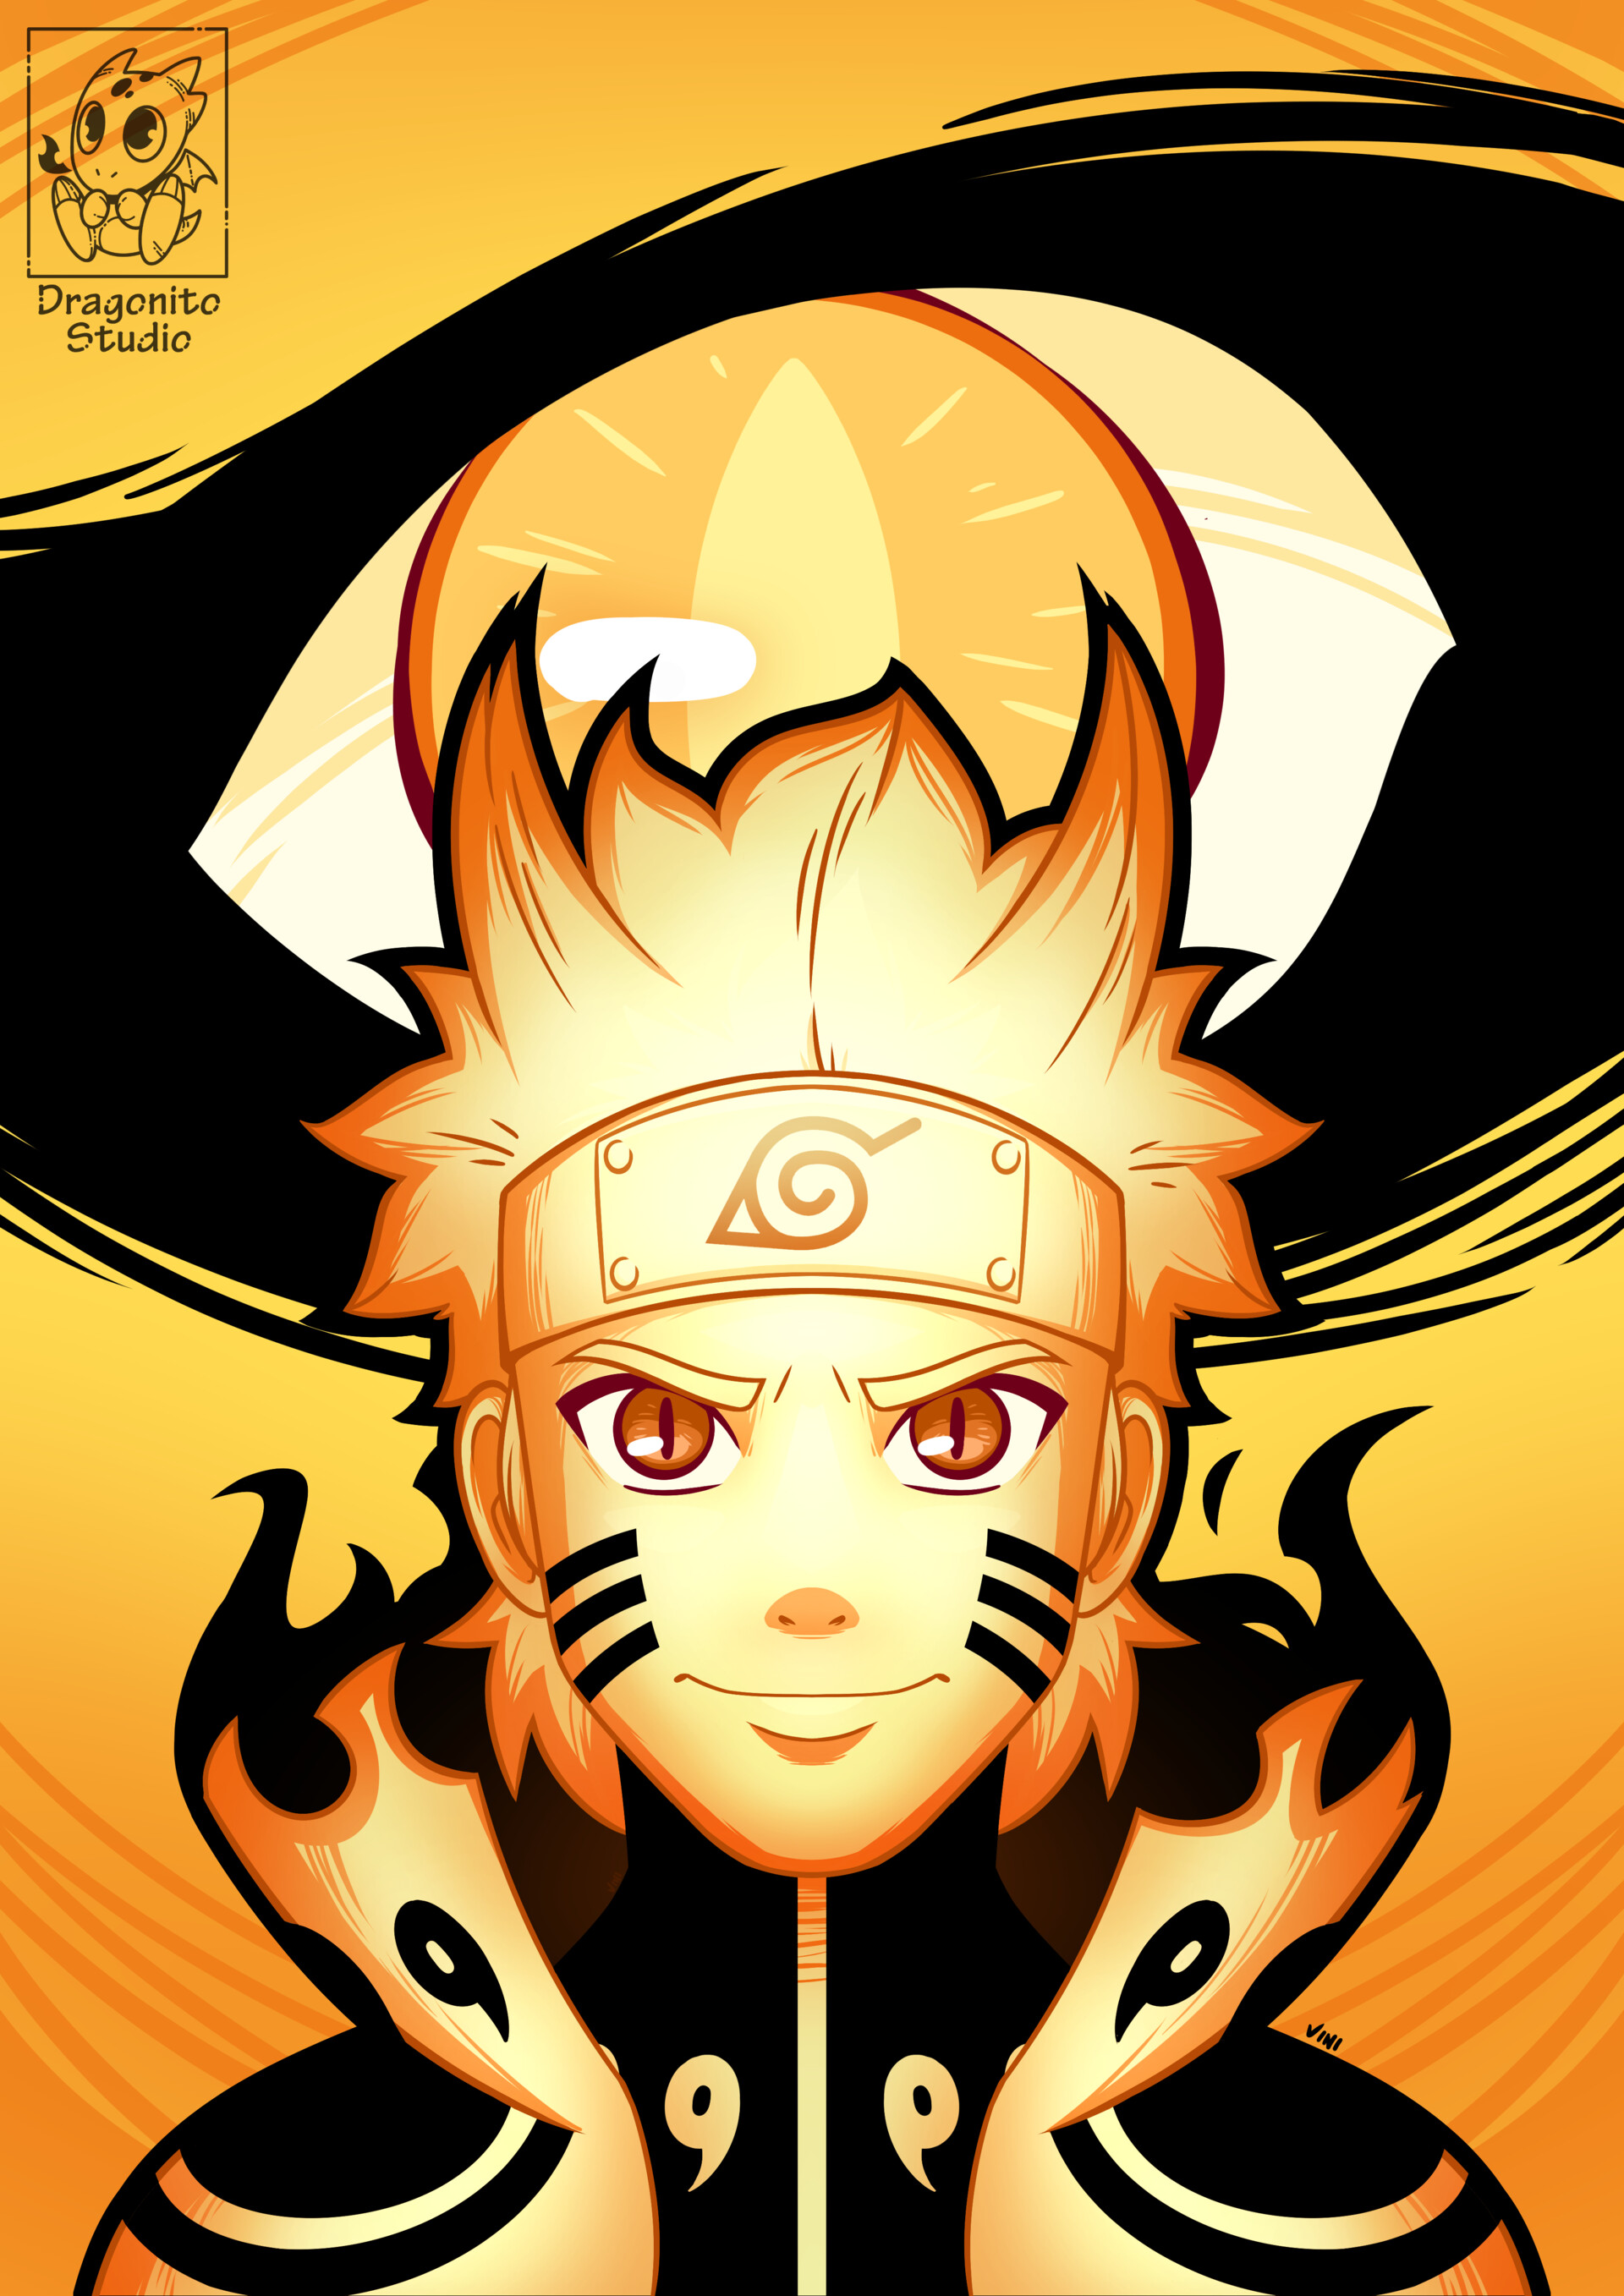 ArtStation - Naruto x Kurama